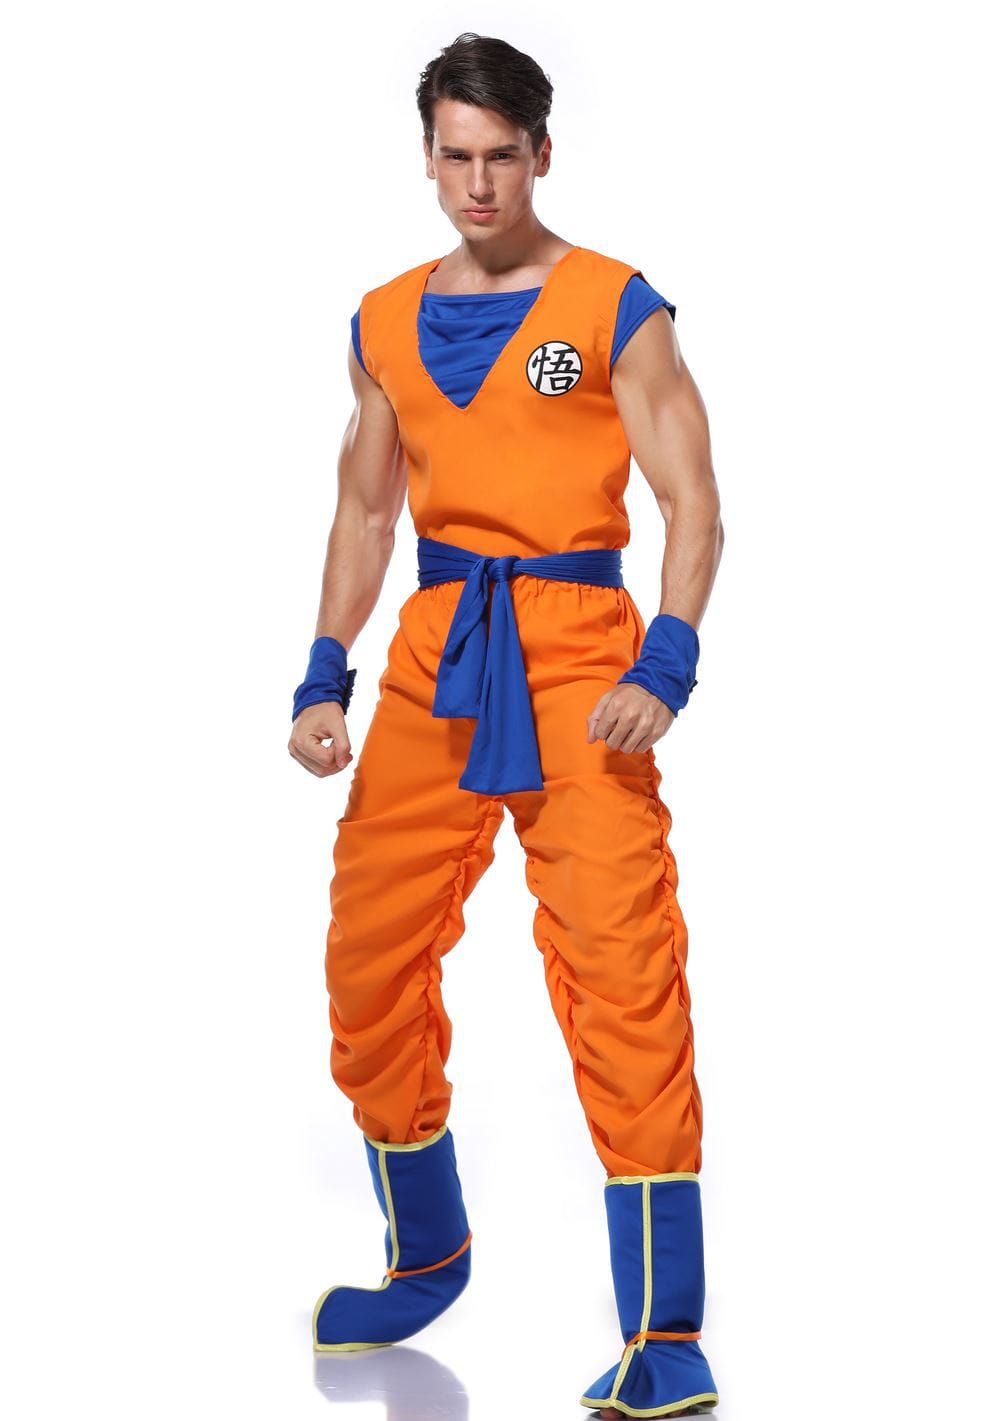 Dragon Ball Z Son Goku Halloween Cosplay Costume